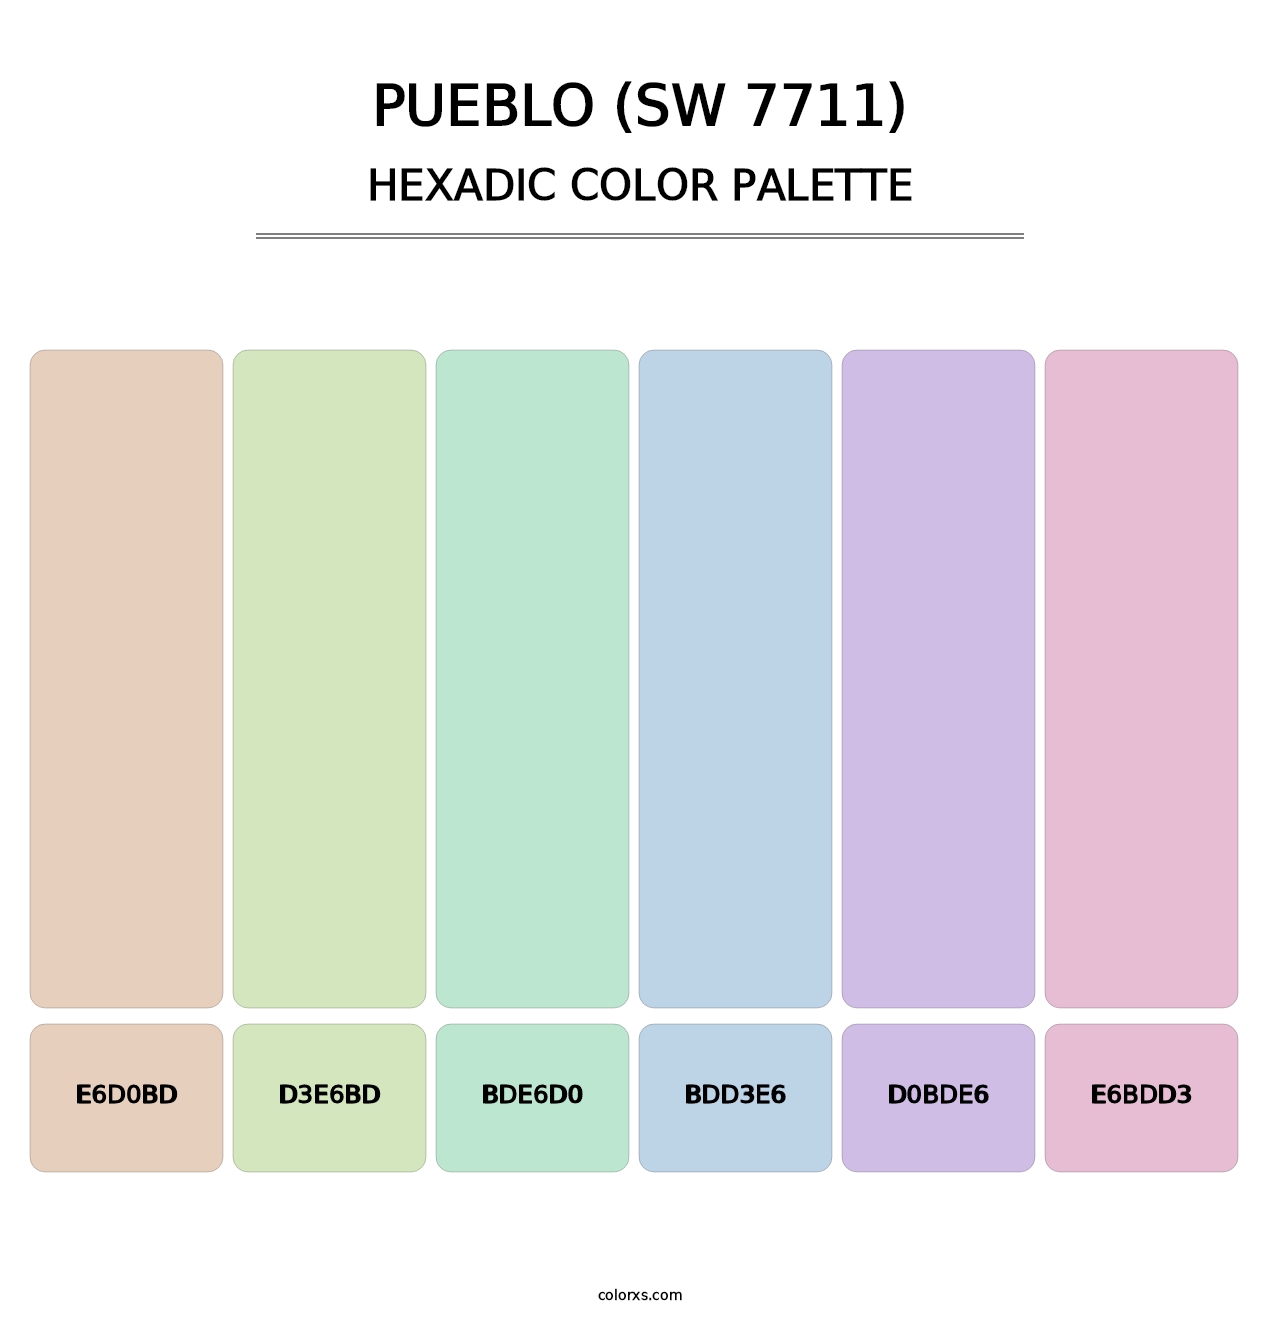 Pueblo (SW 7711) - Hexadic Color Palette